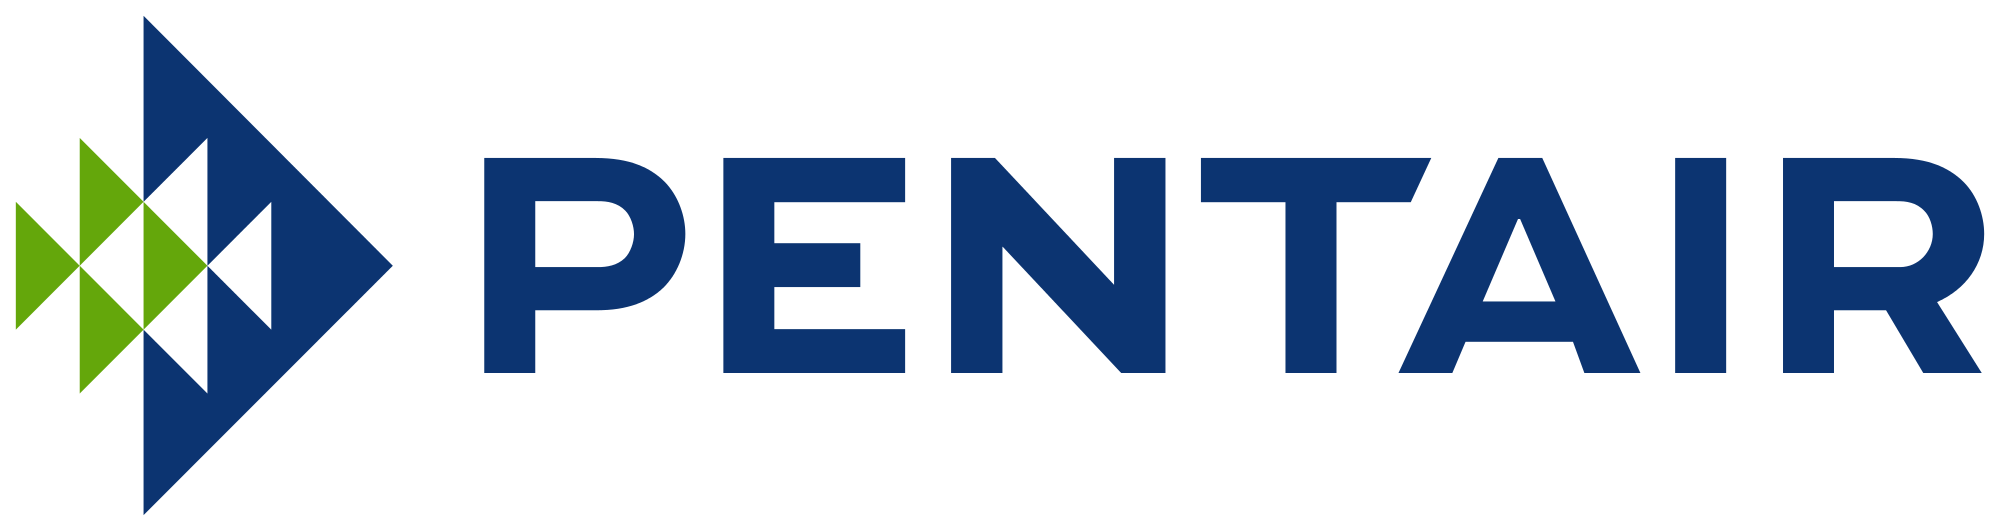 Pentair_Schroff_Logo.svg.png